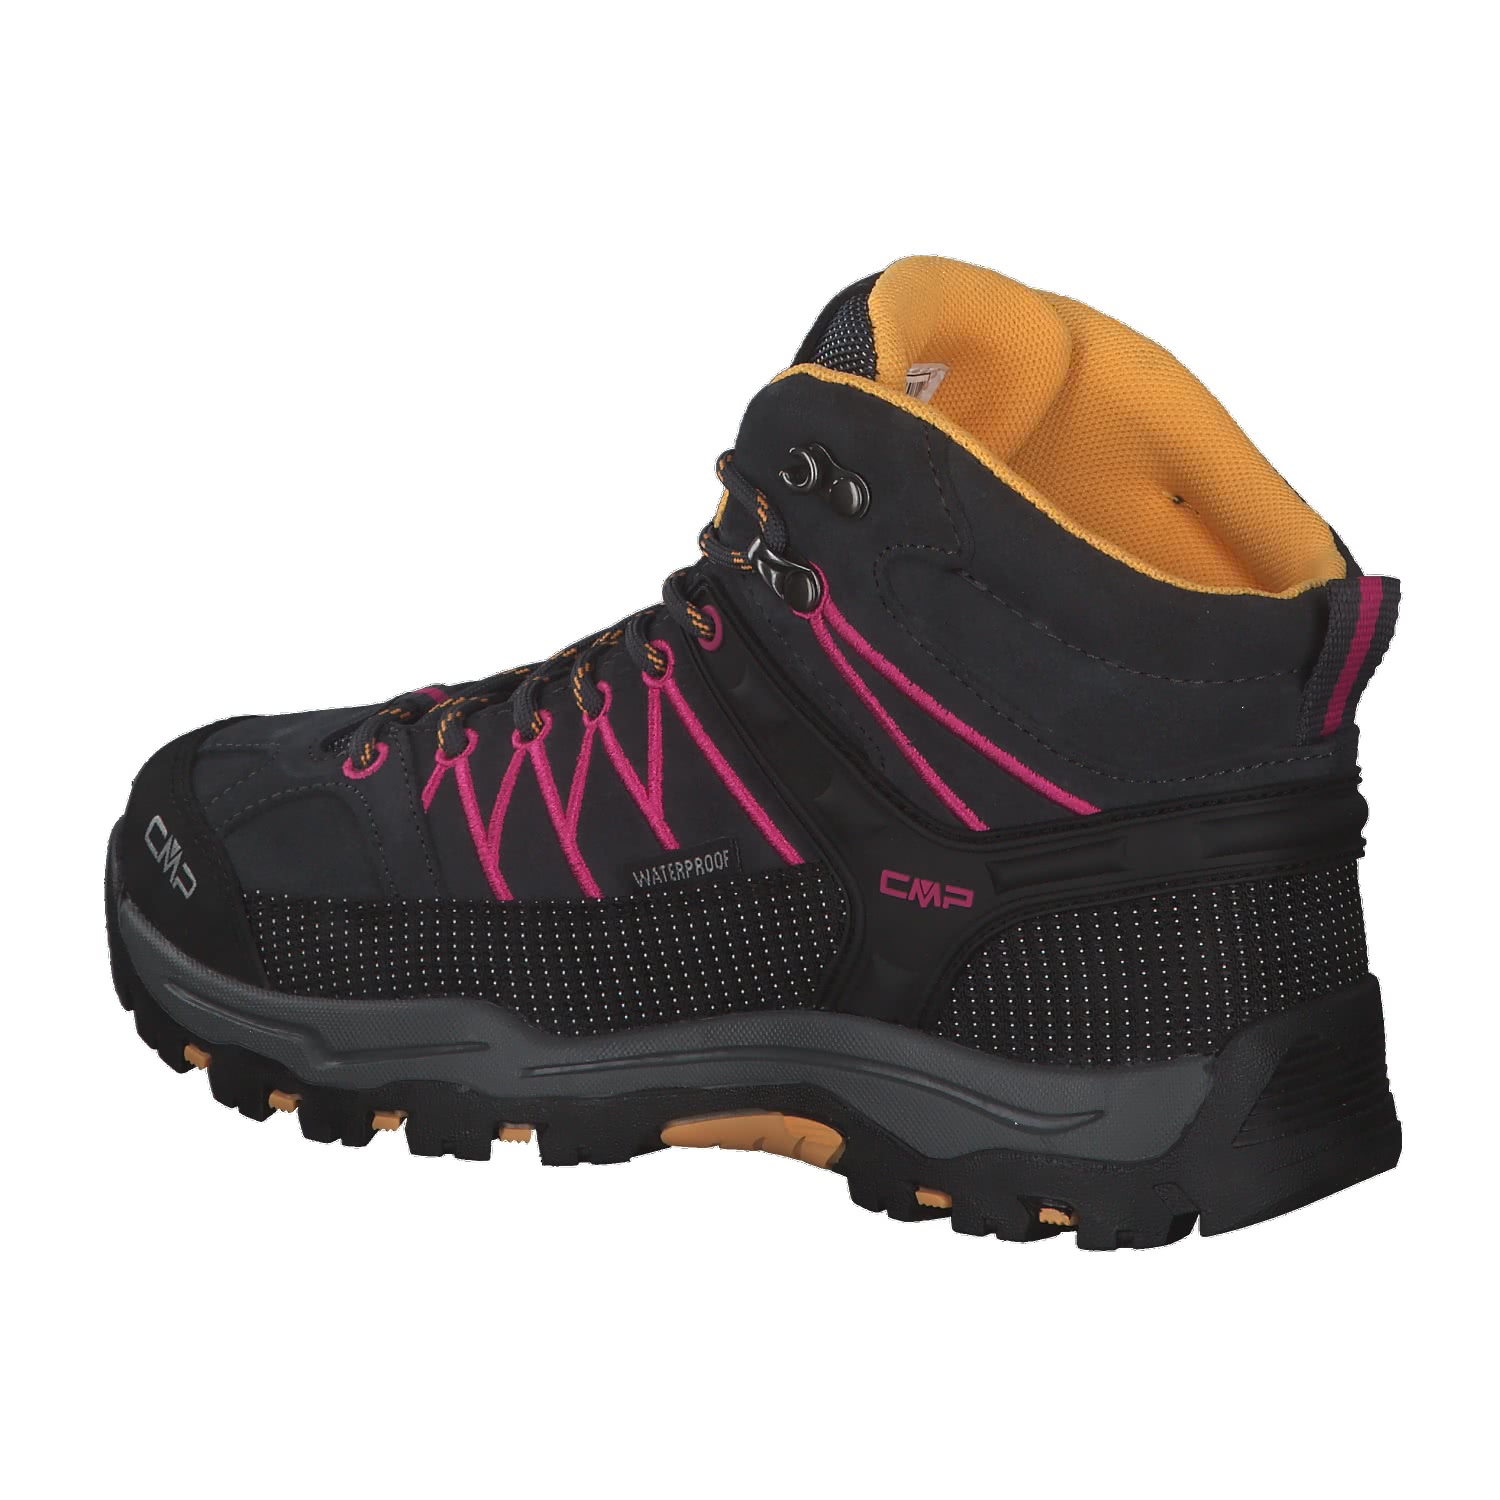 CMP Kinder Trekking Schuhe Rigel MID 3Q12944J | eBay